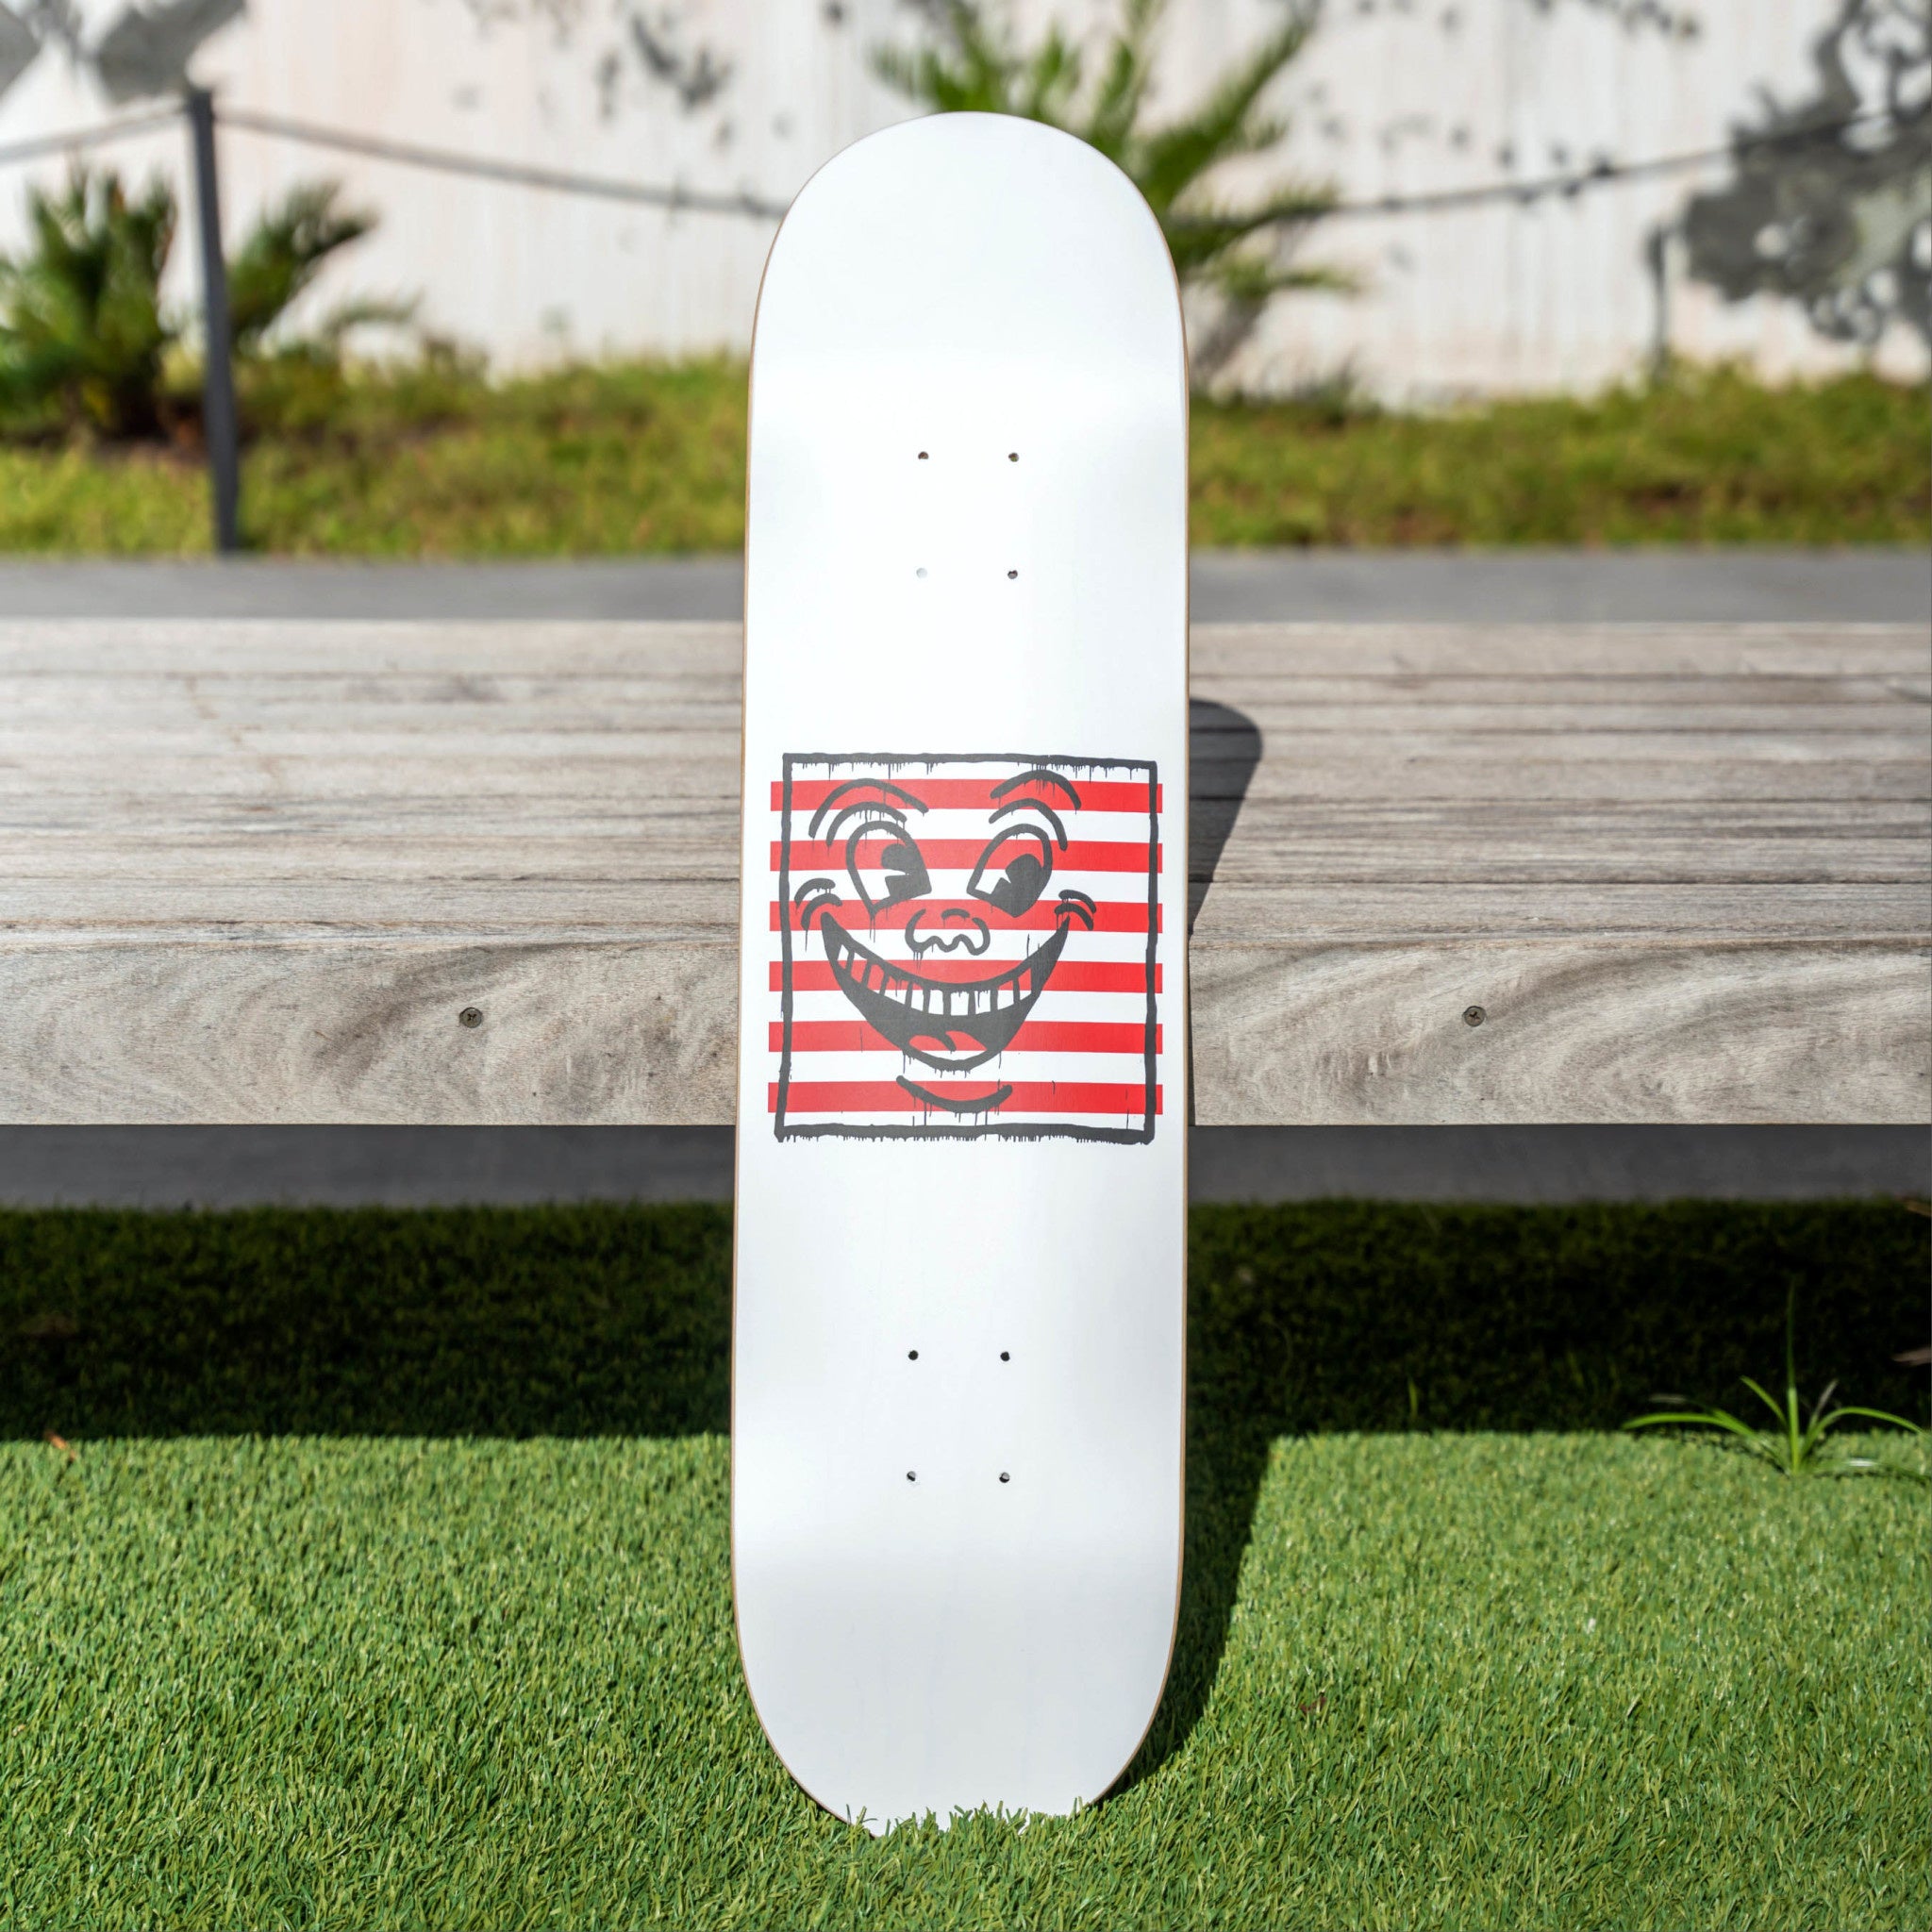 Keith Haring Smiles on Stripes Skate Deck - Wynwood Walls Shop